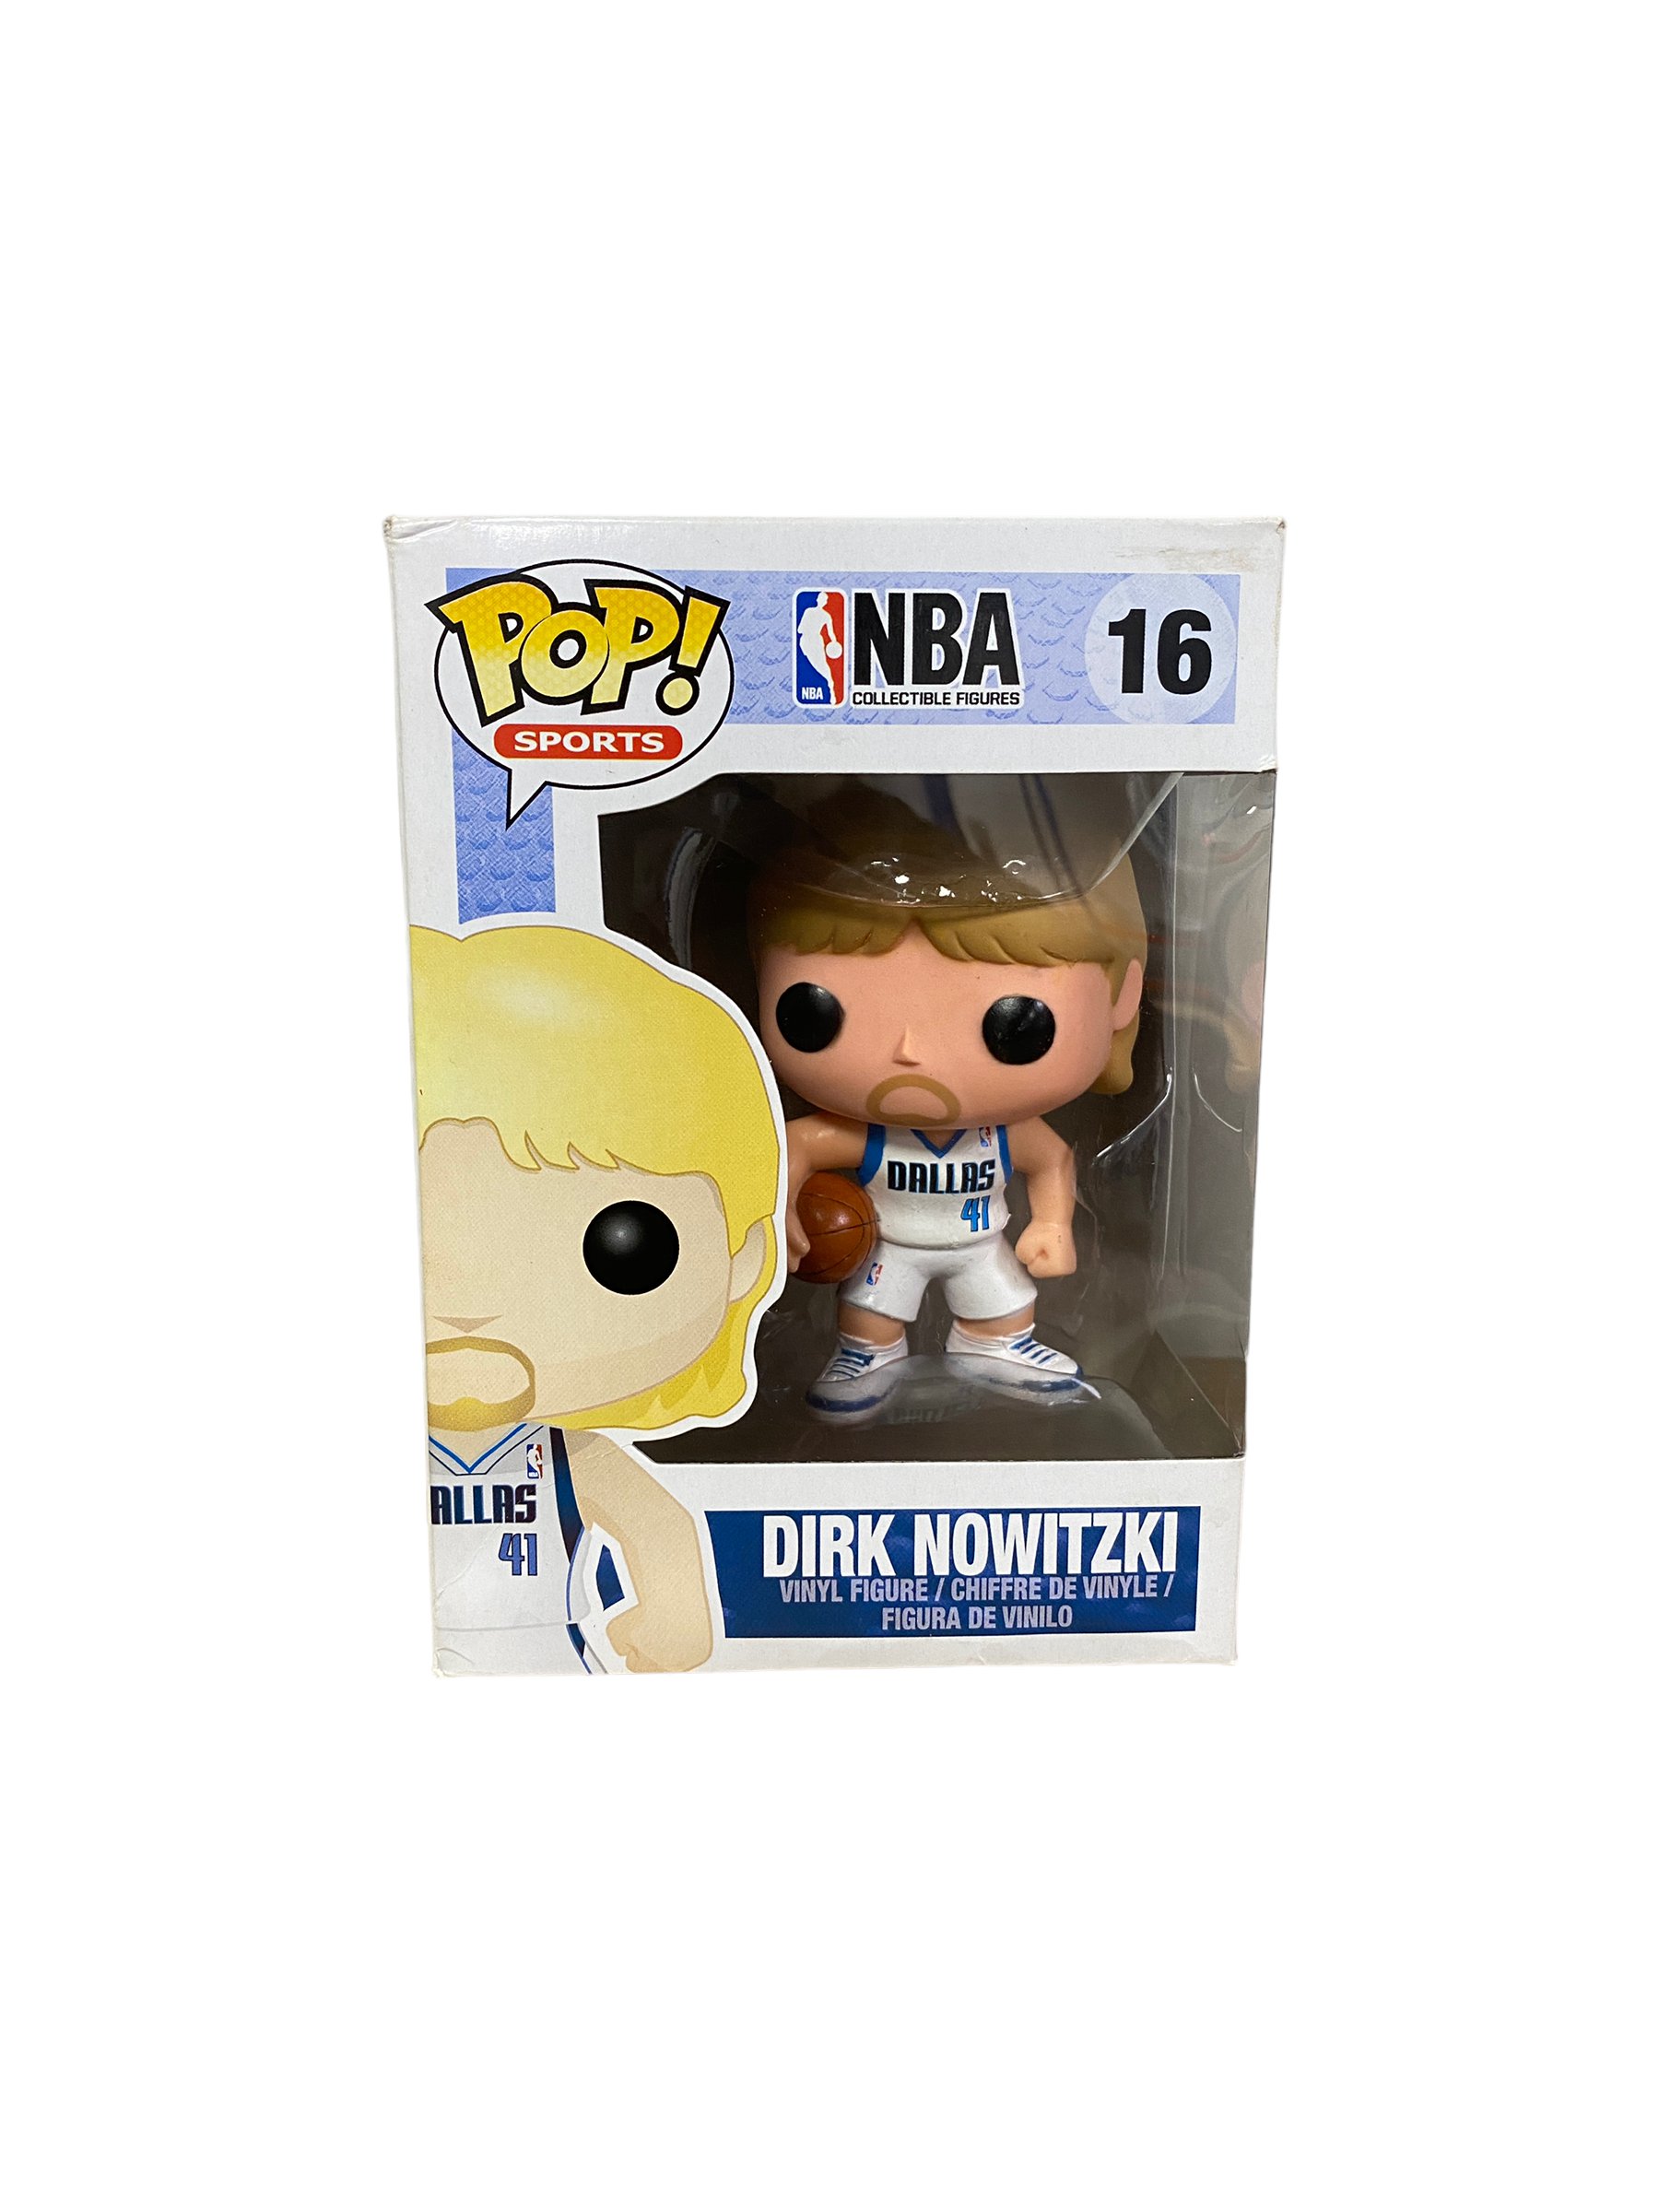 Dirk Nowitzki #16 Funko Pop! - NBA - 2013 Pop! - Condition 7.5/10